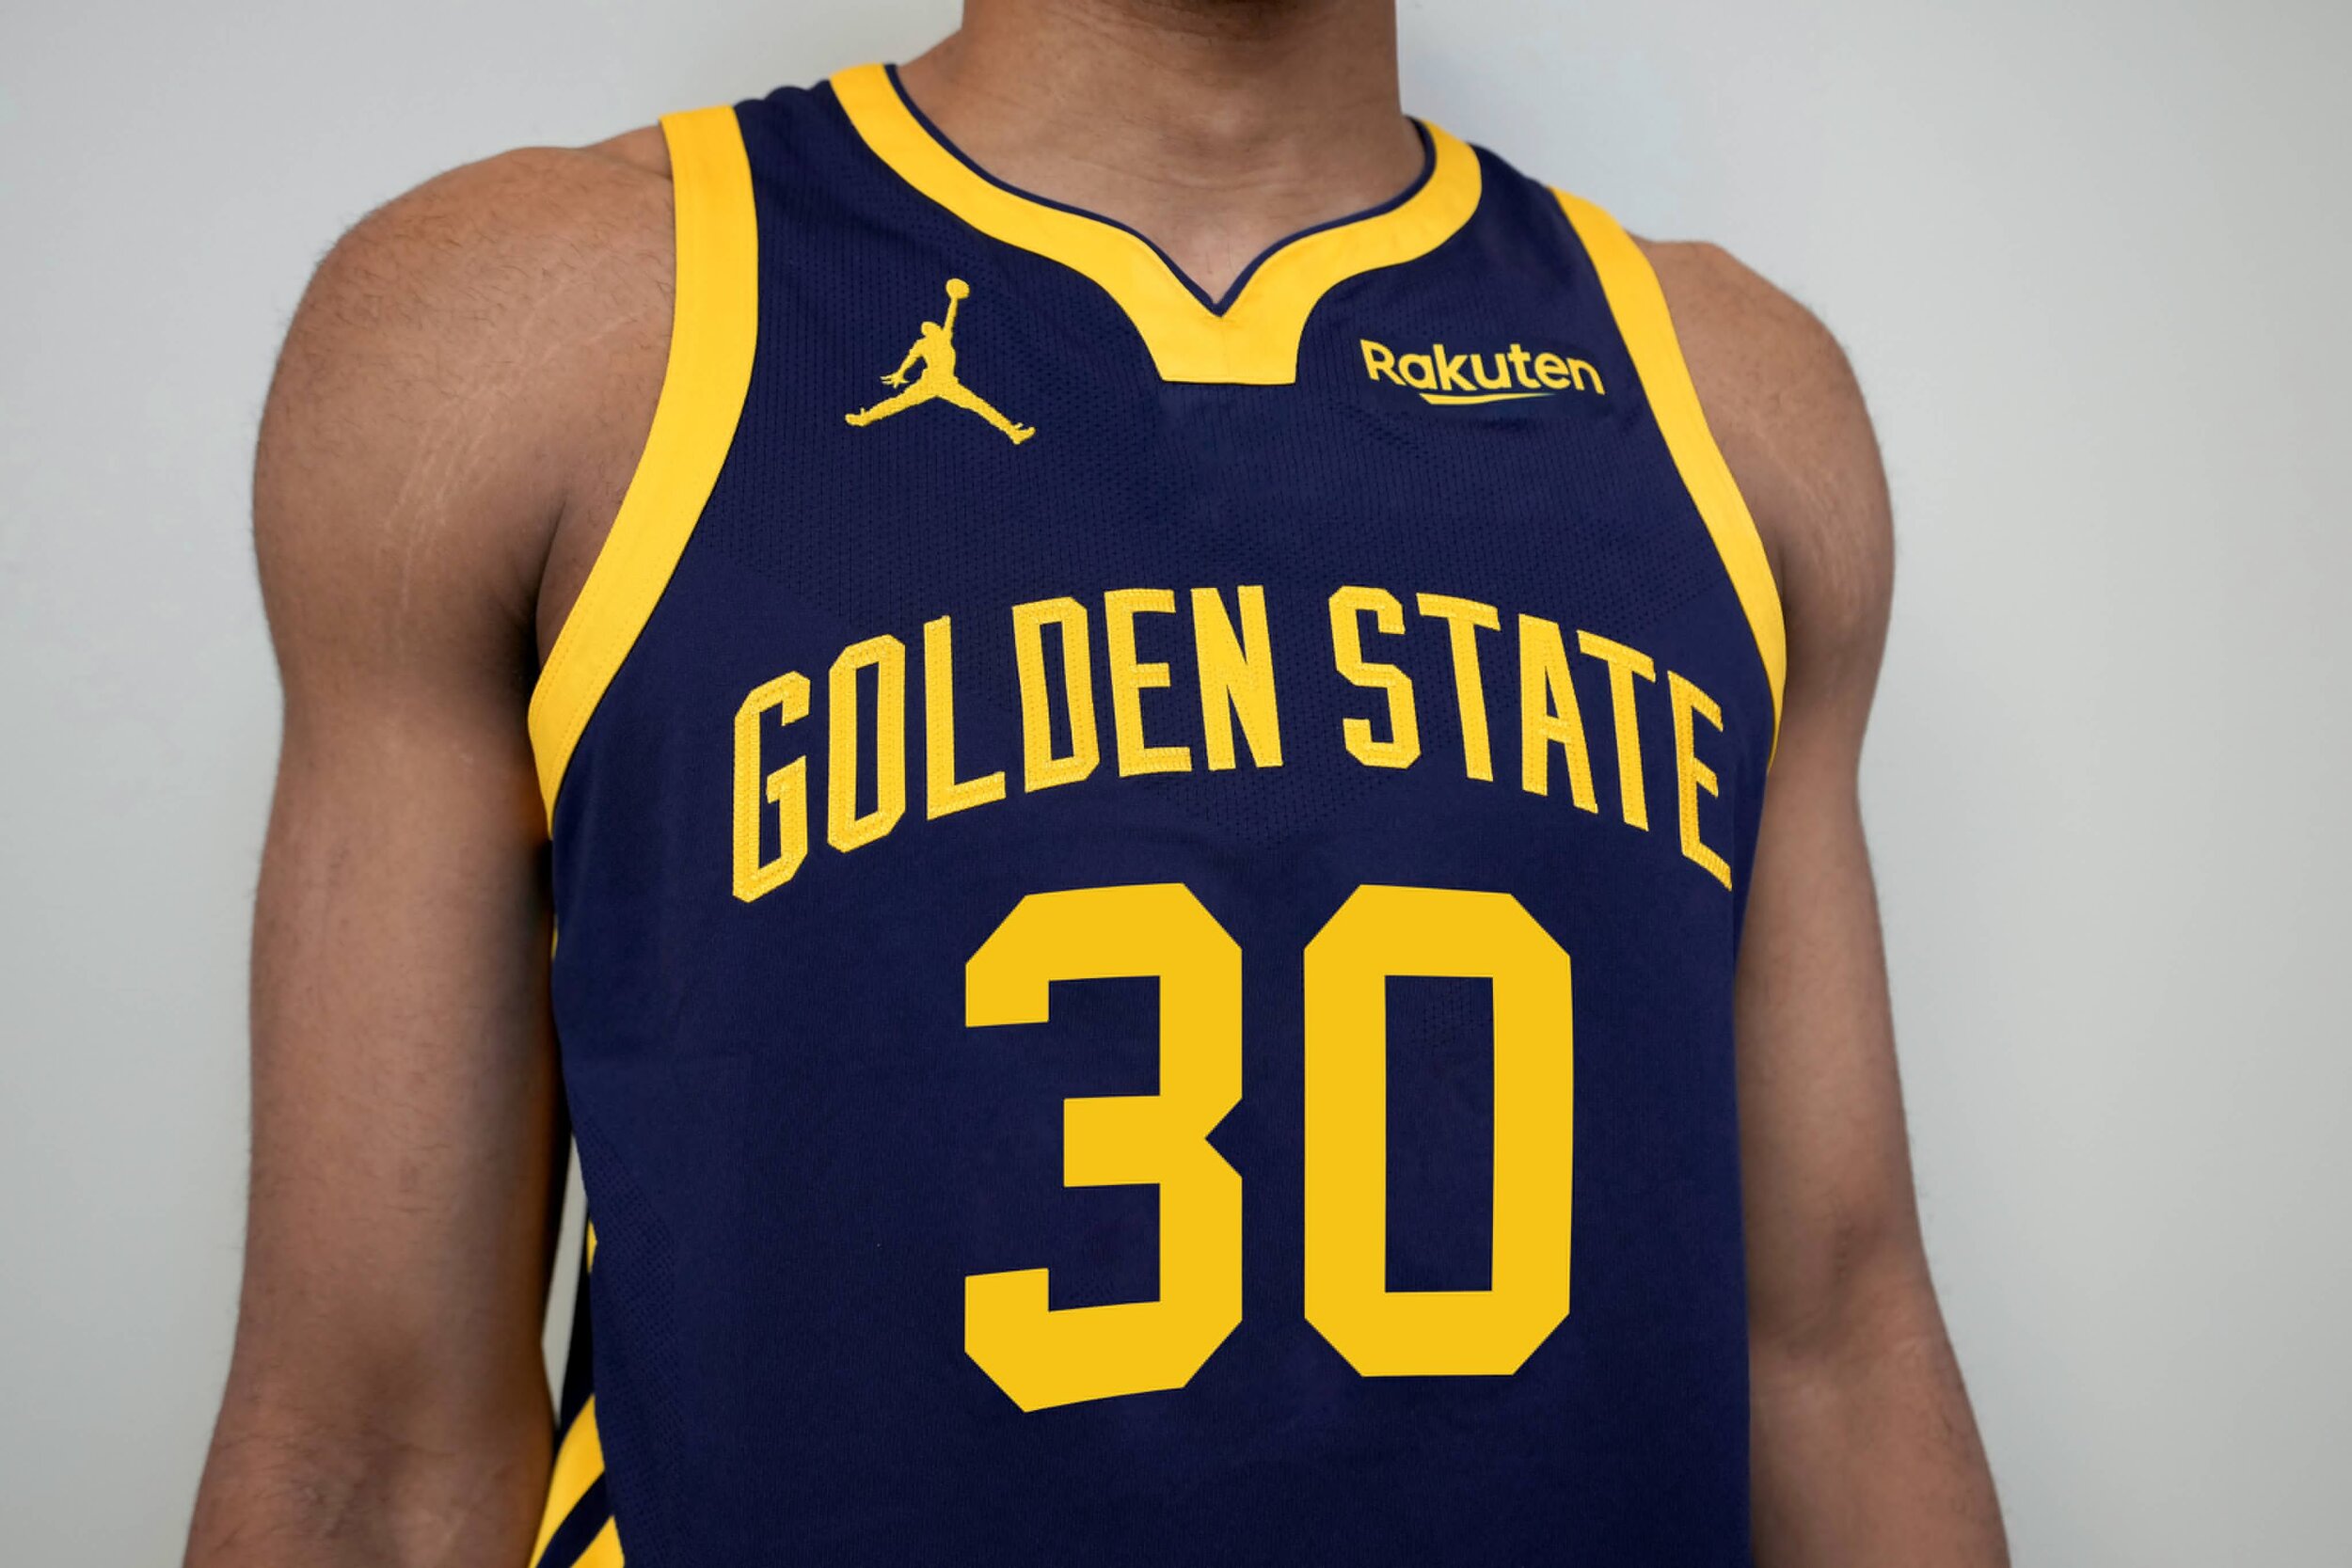 Golden State Celebrates 75 Years with new “Origins” Uniform, Classic Court  – SportsLogos.Net News